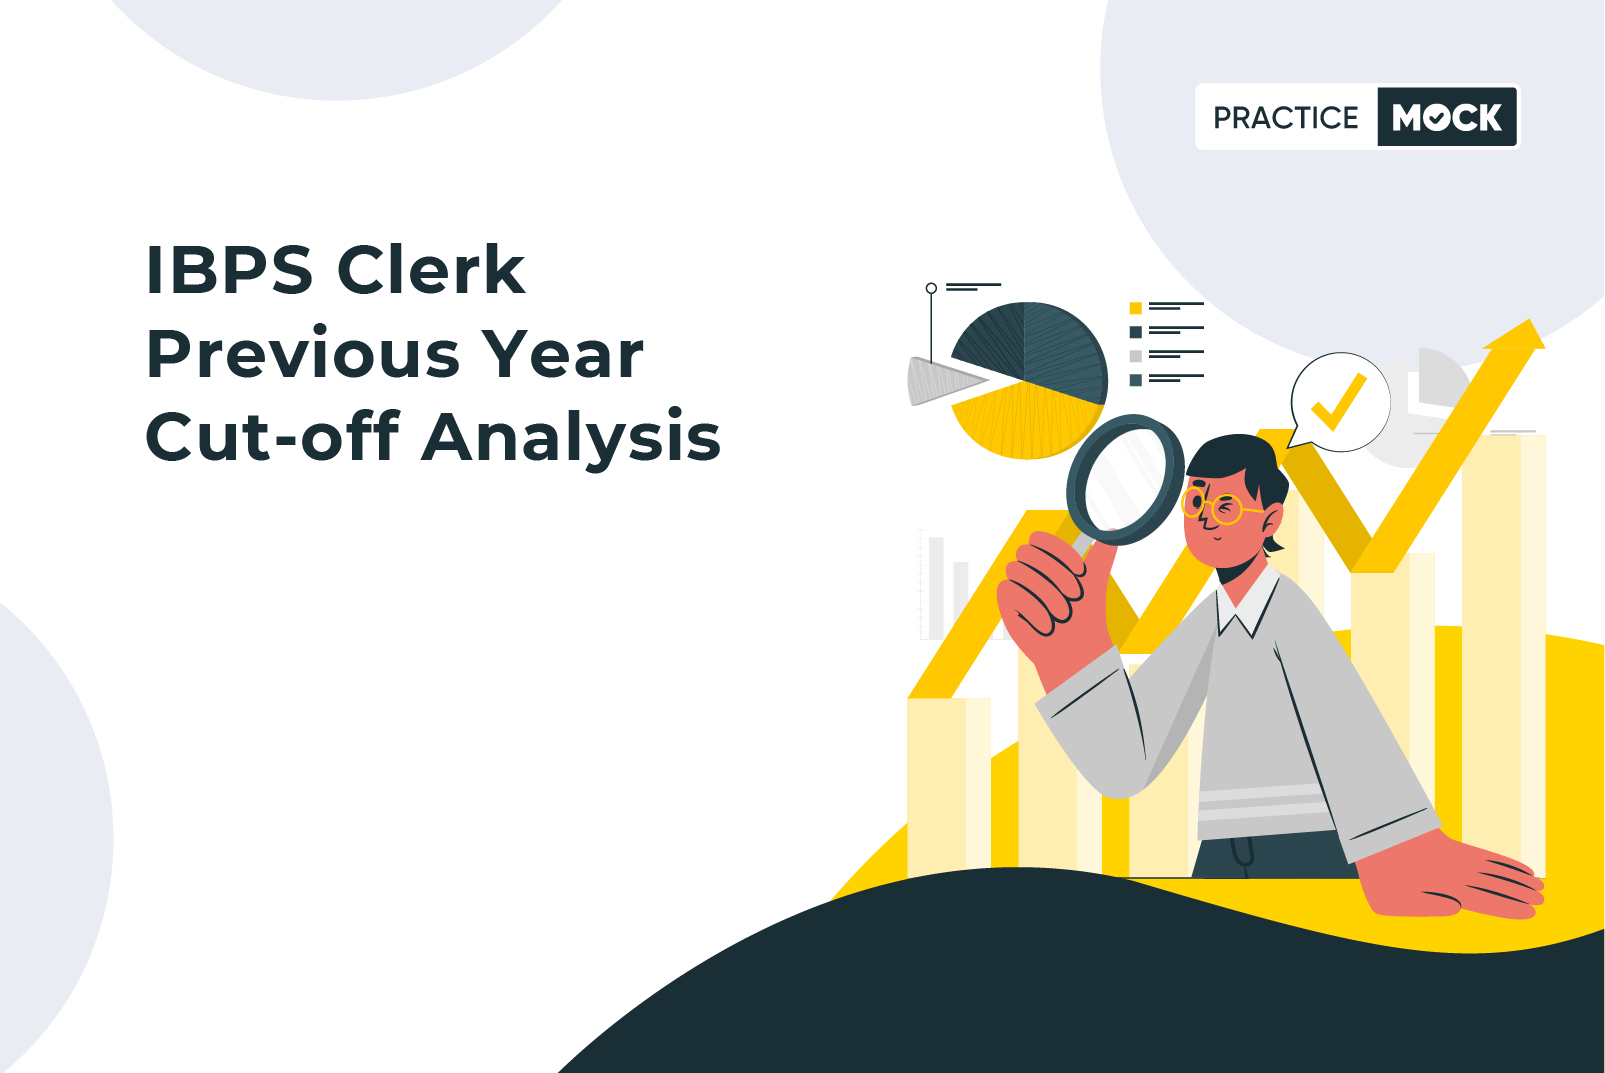 IBPS Clerk Previous Year Cut-off Analysis